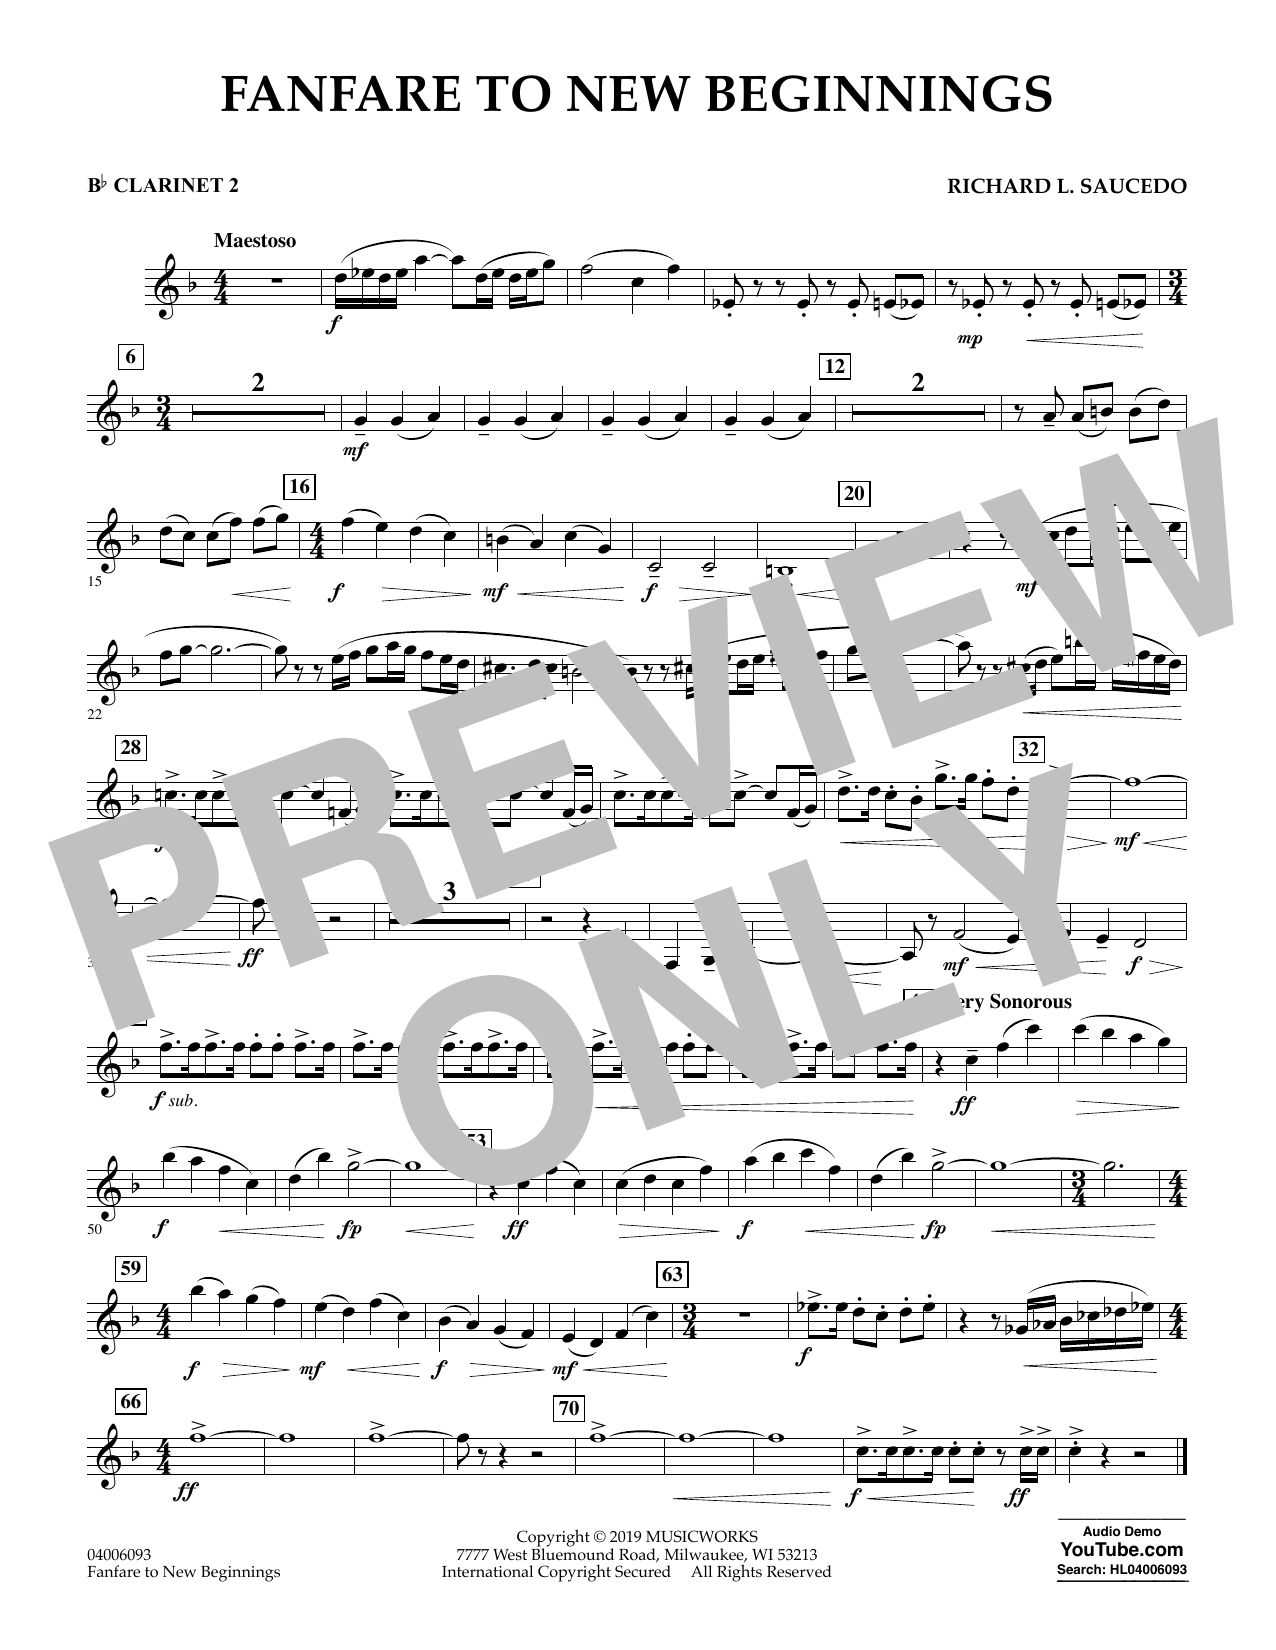 Download Richard L. Saucedo Fanfare for New Beginnings - Bb Clarine Sheet Music